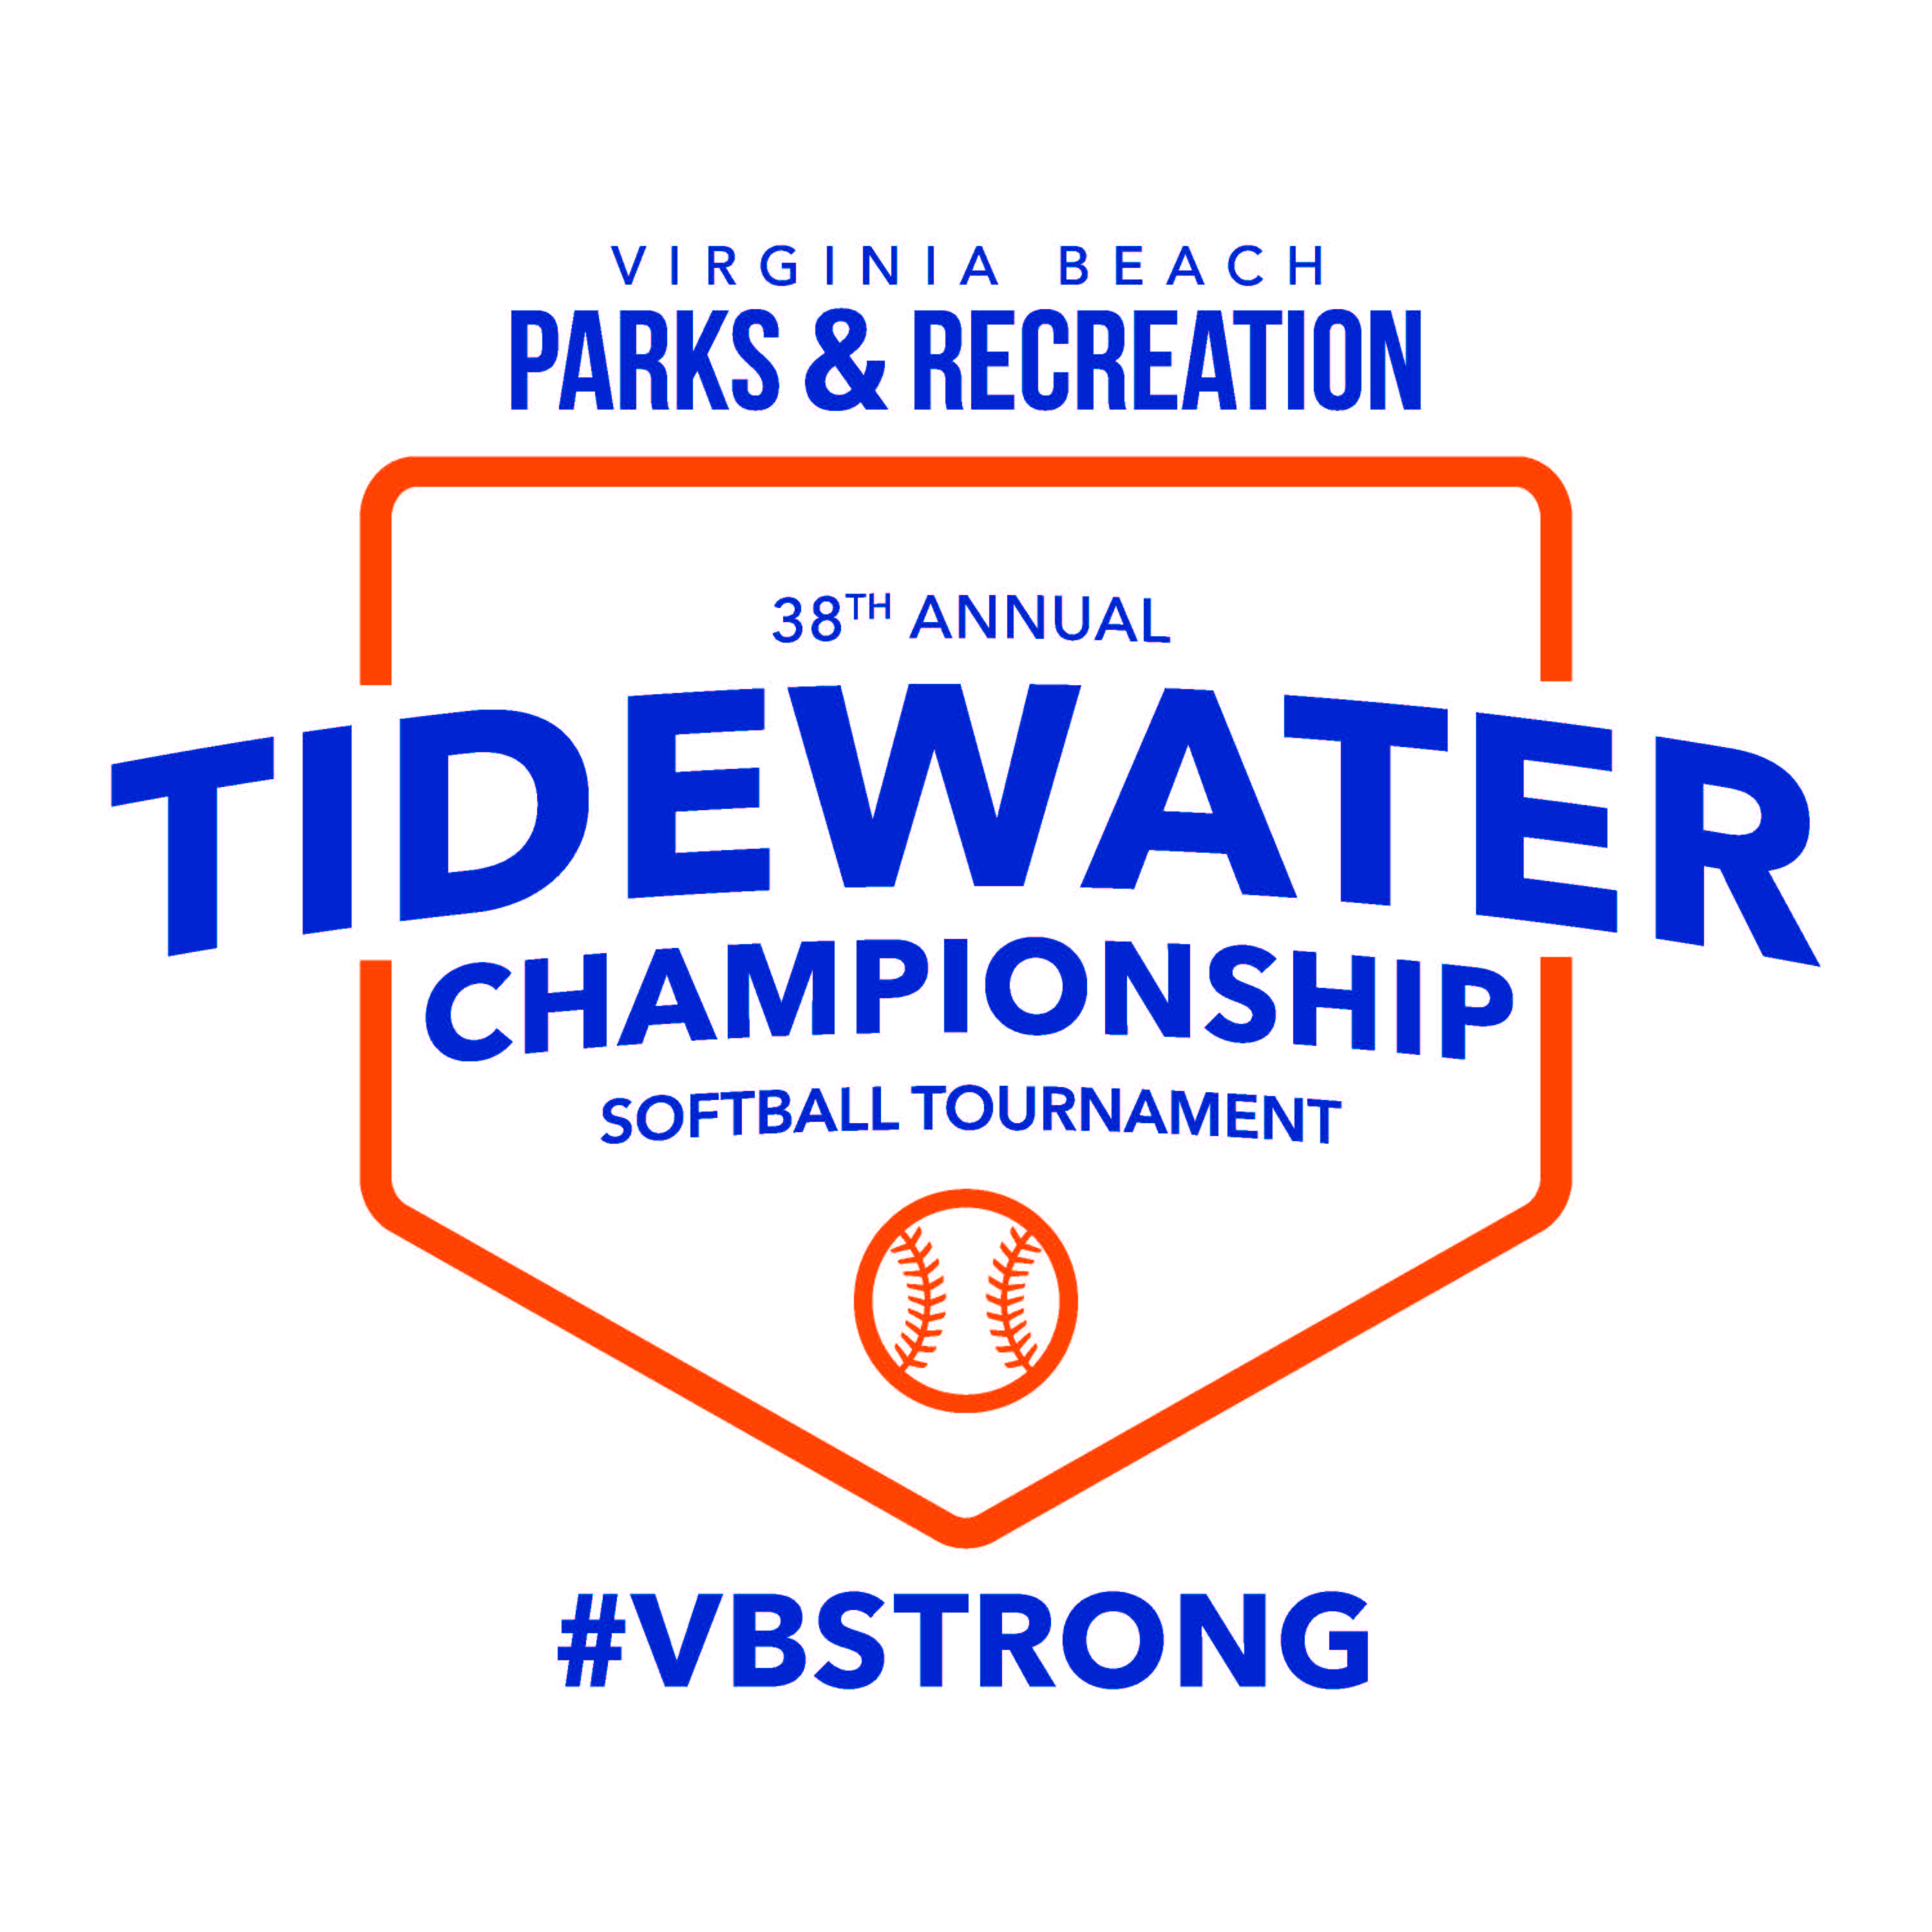 Tidewater Logo - Tidewater Softball Championship :: VBgov.com - City of Virginia Beach